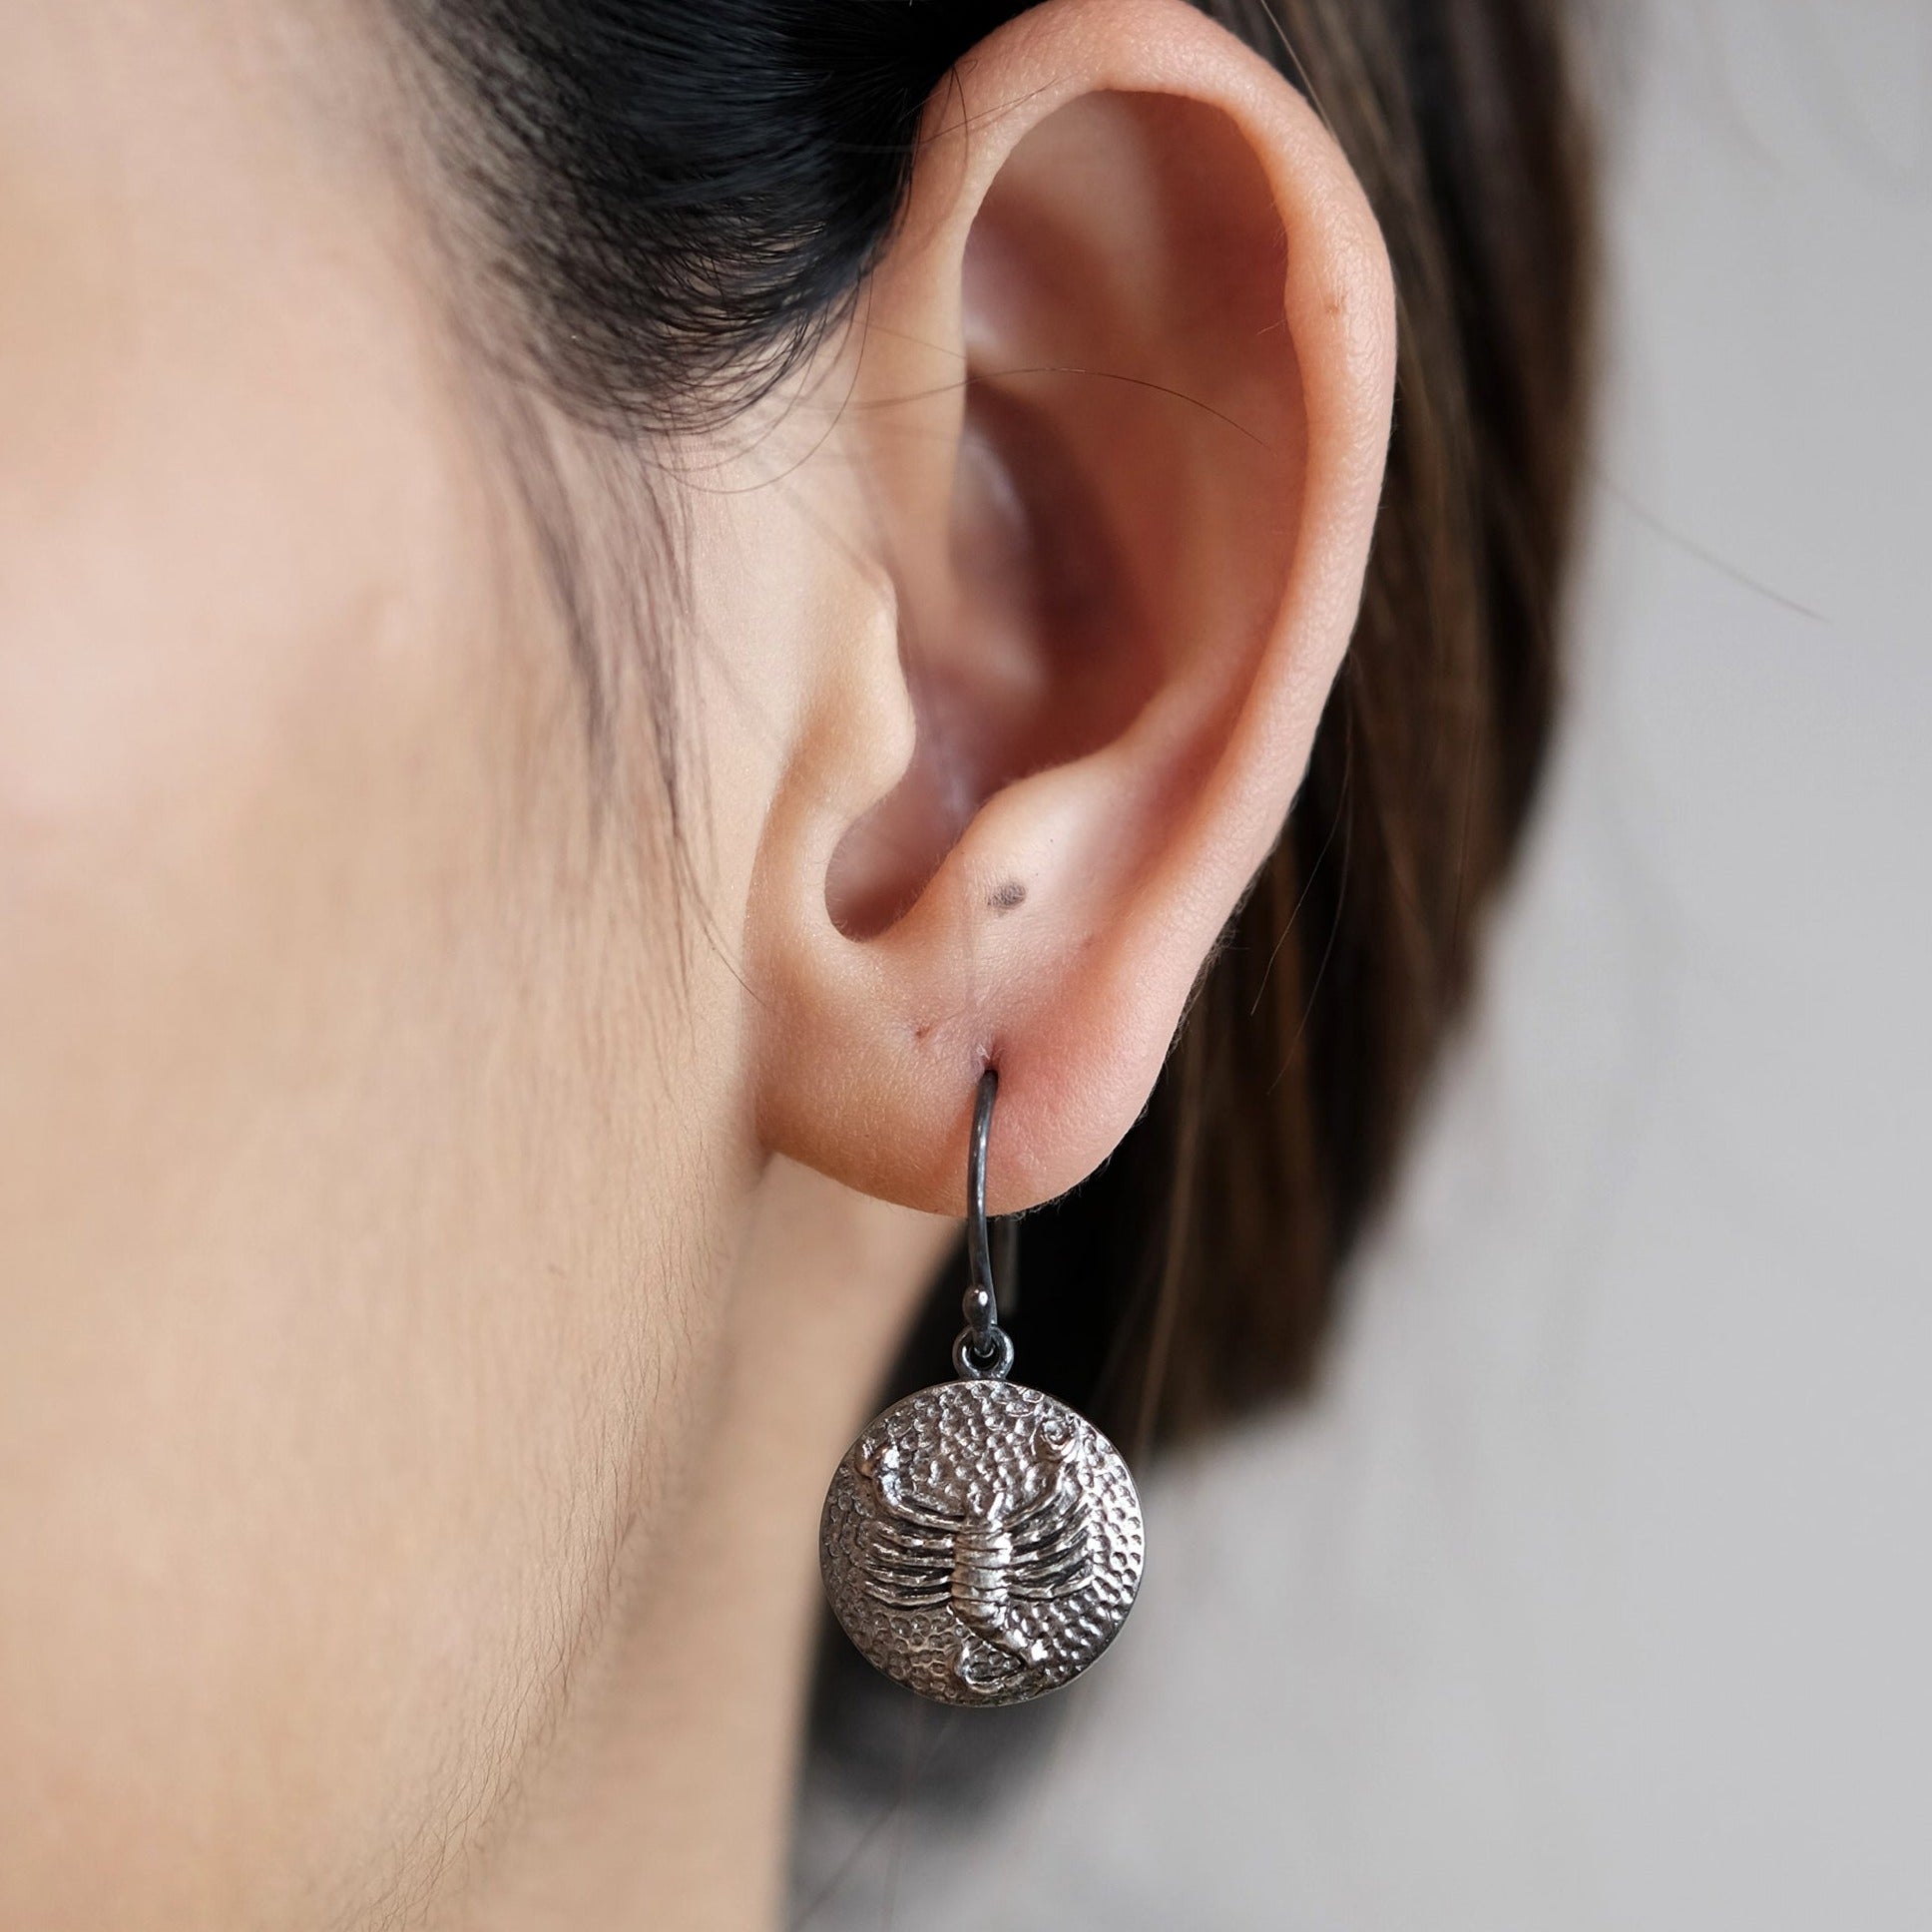 The Madstone Scorpio earrings